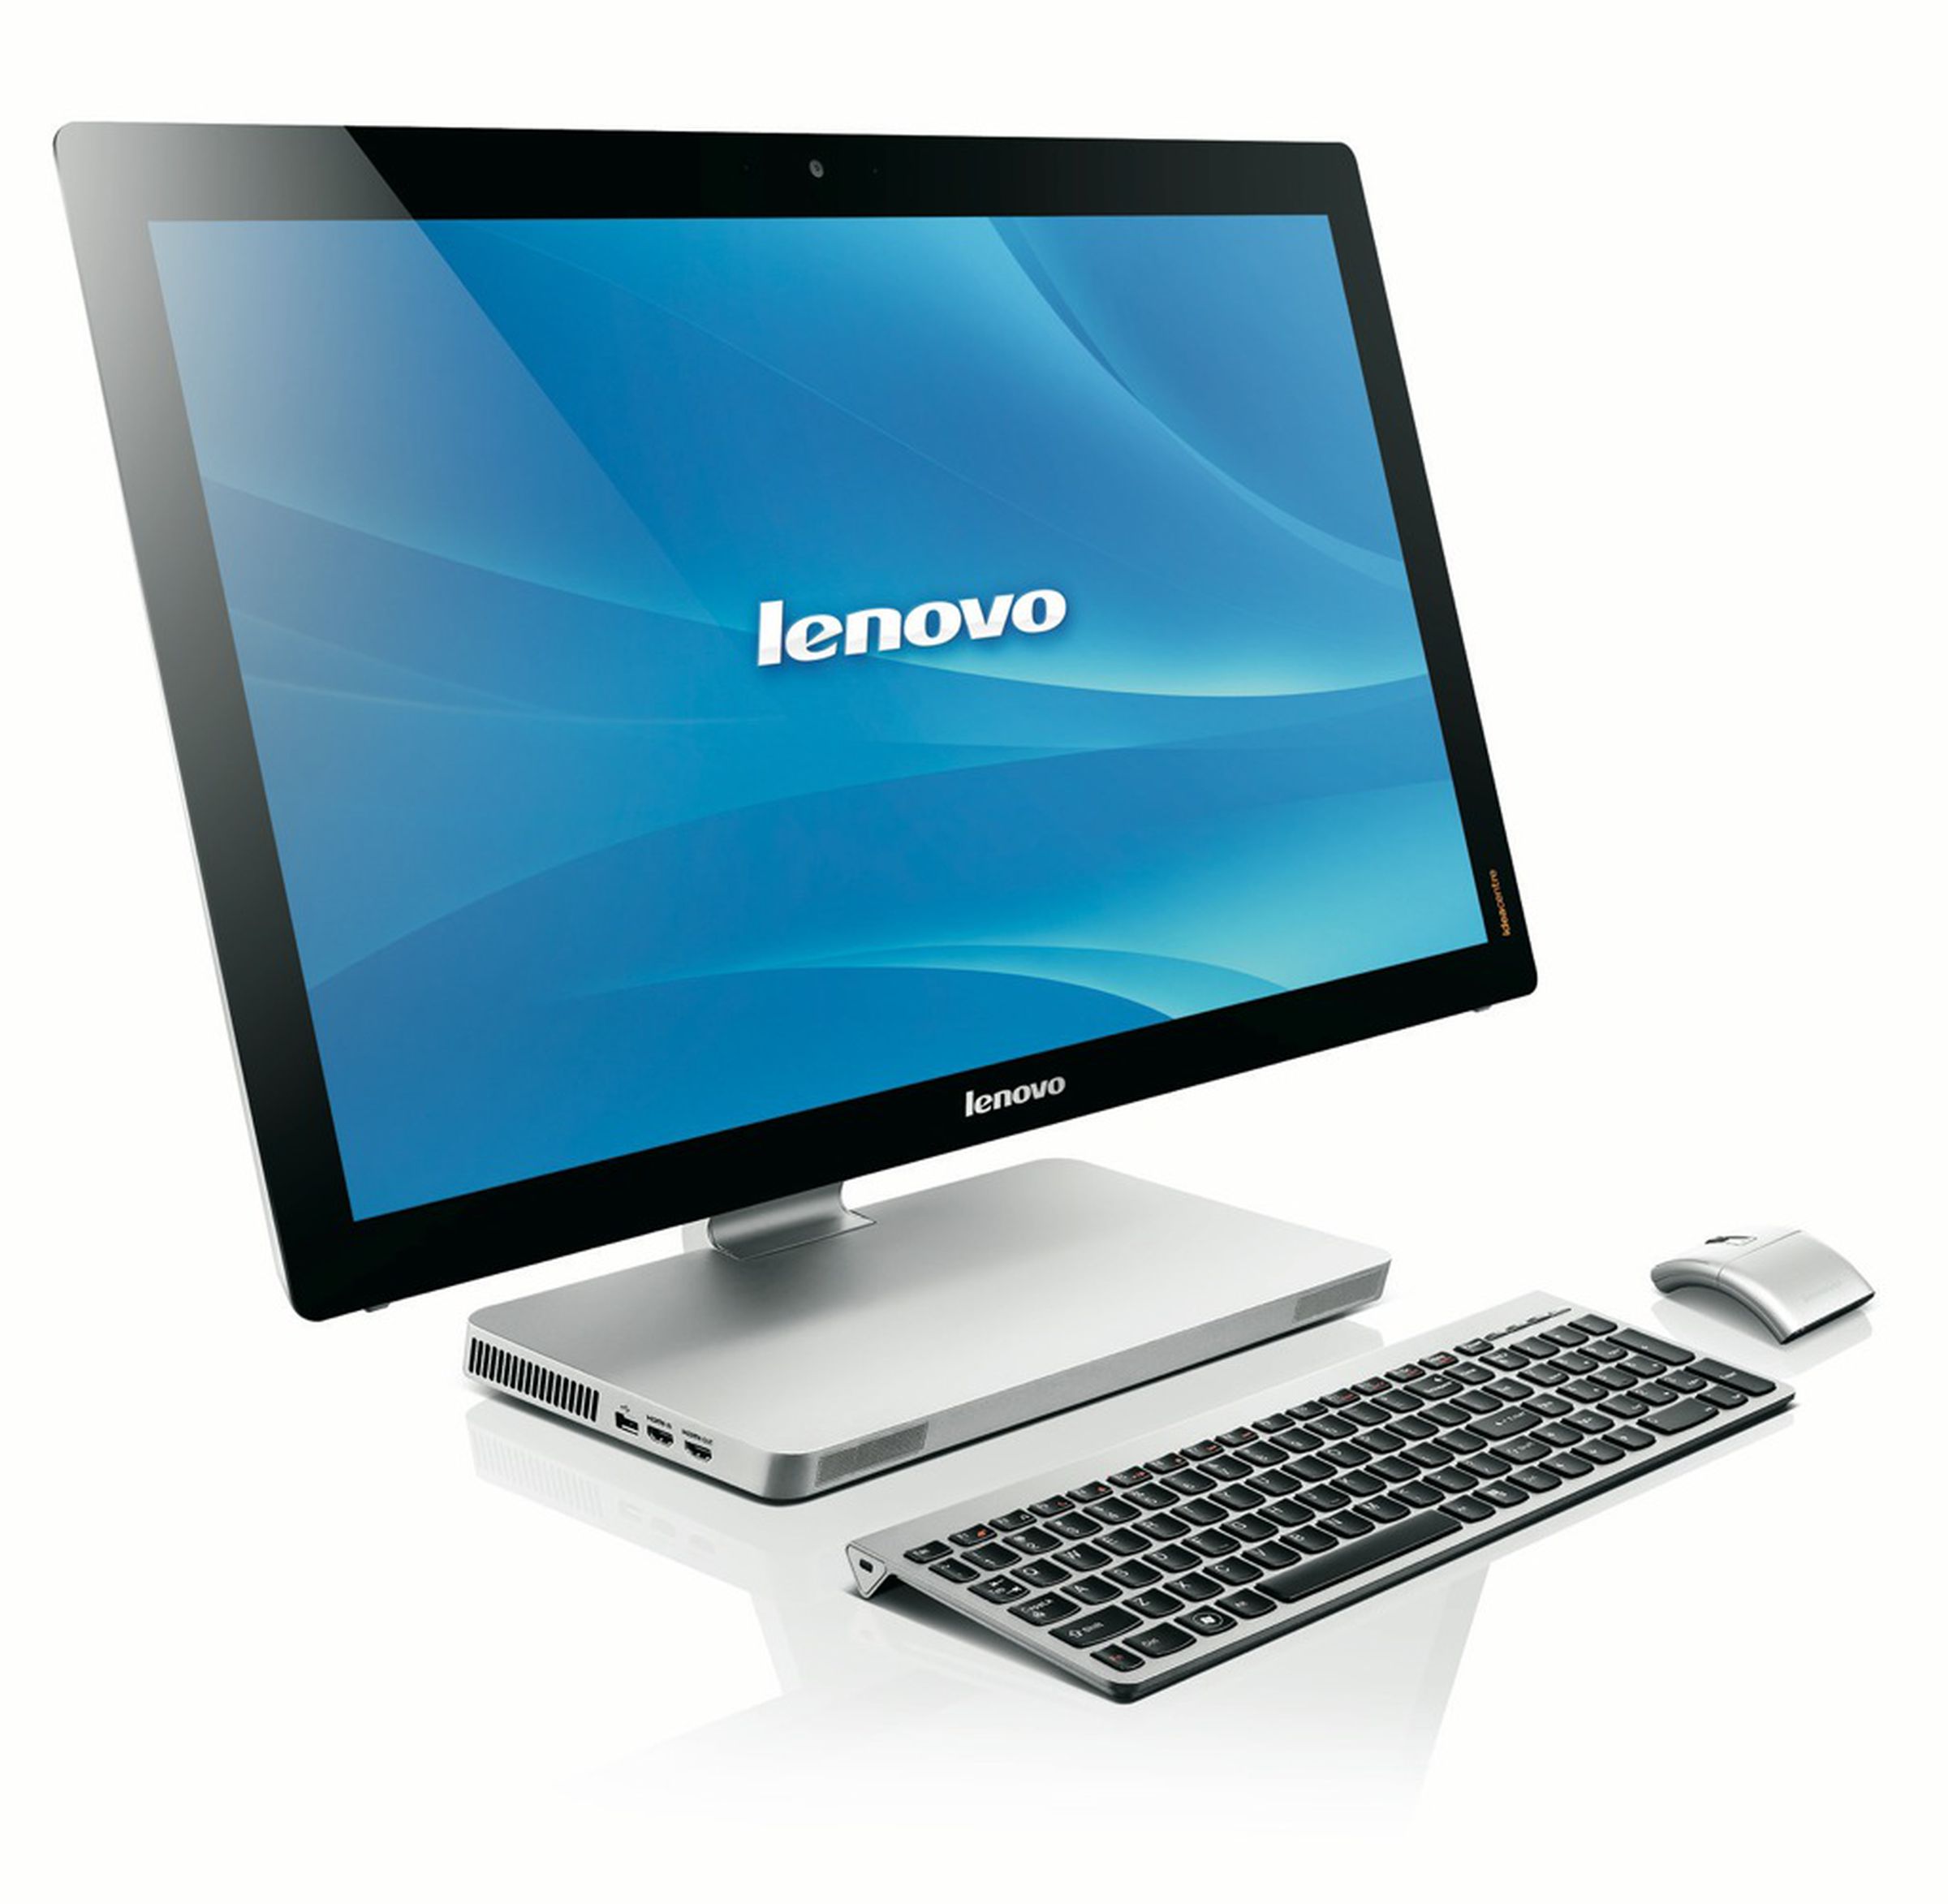 Lenovo IdeaCentre A730 all-in-one